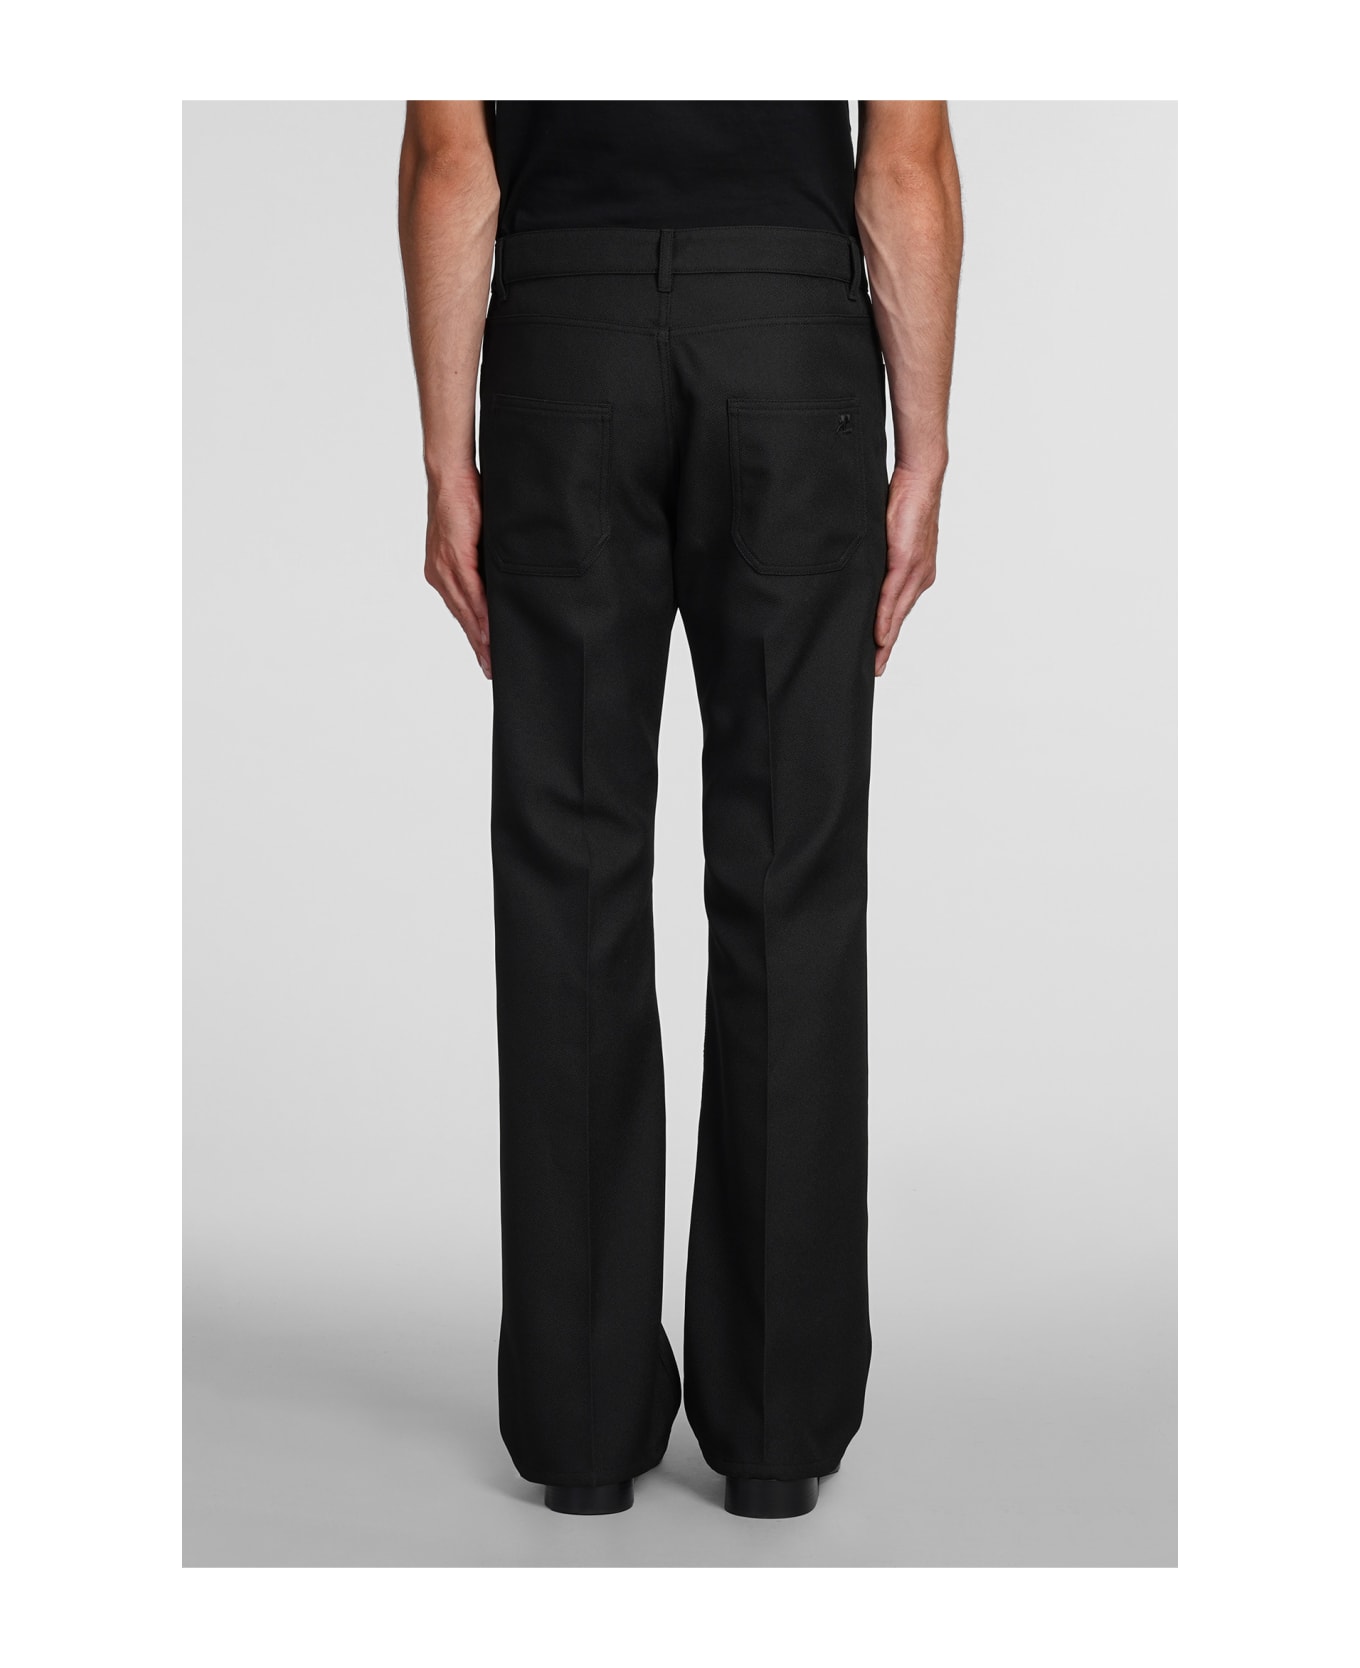 Courrèges Pants In Black Polyester - Black